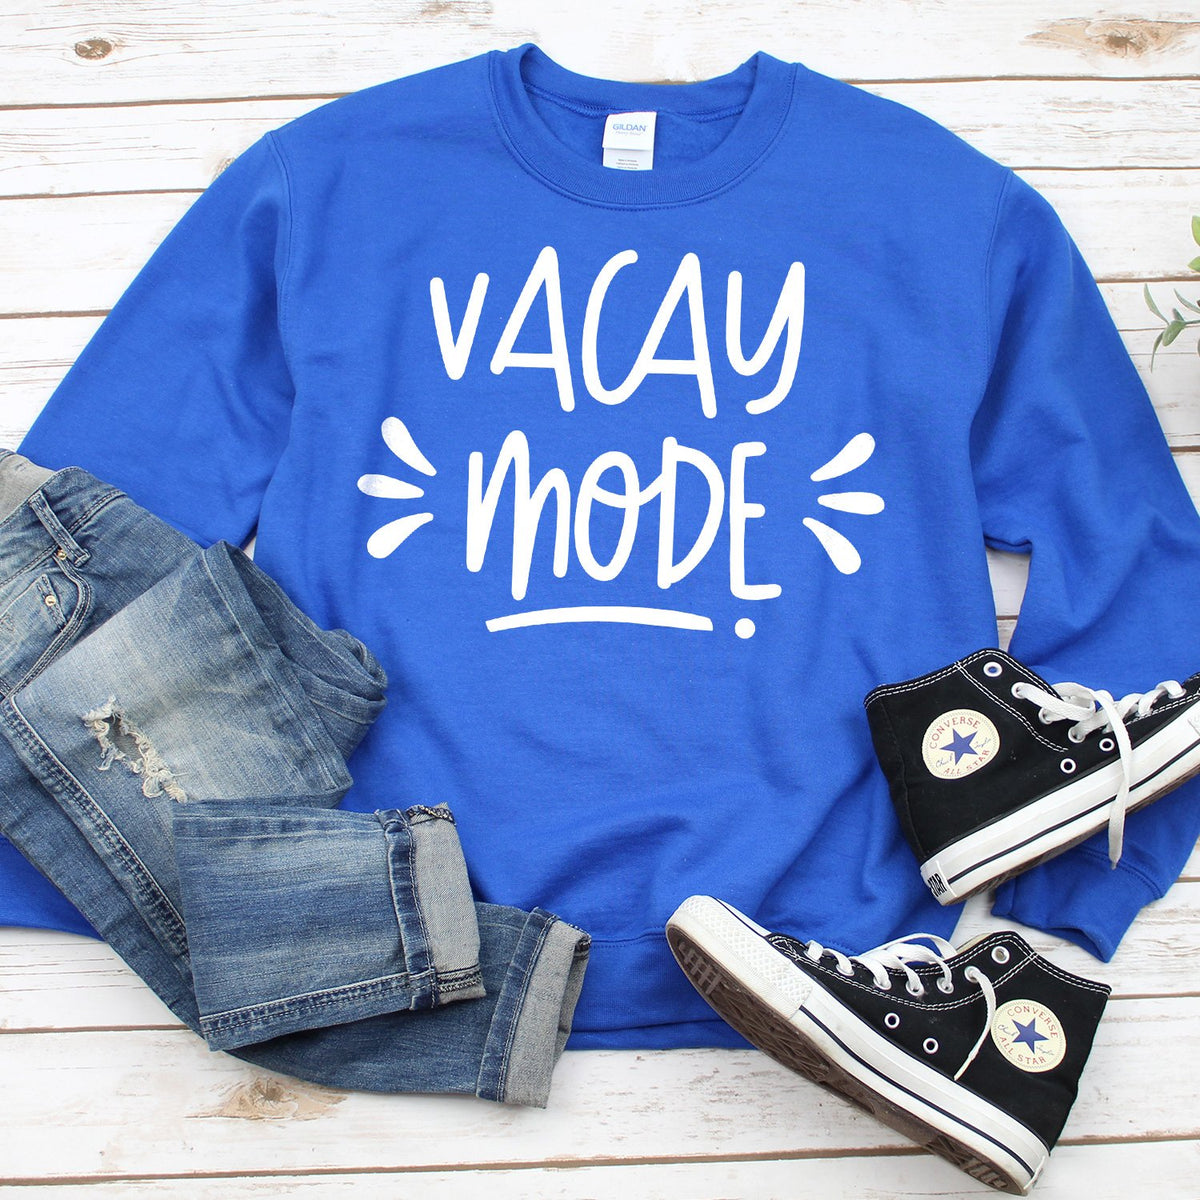 Vacay Mode - Long Sleeve Heavy Crewneck Sweatshirt